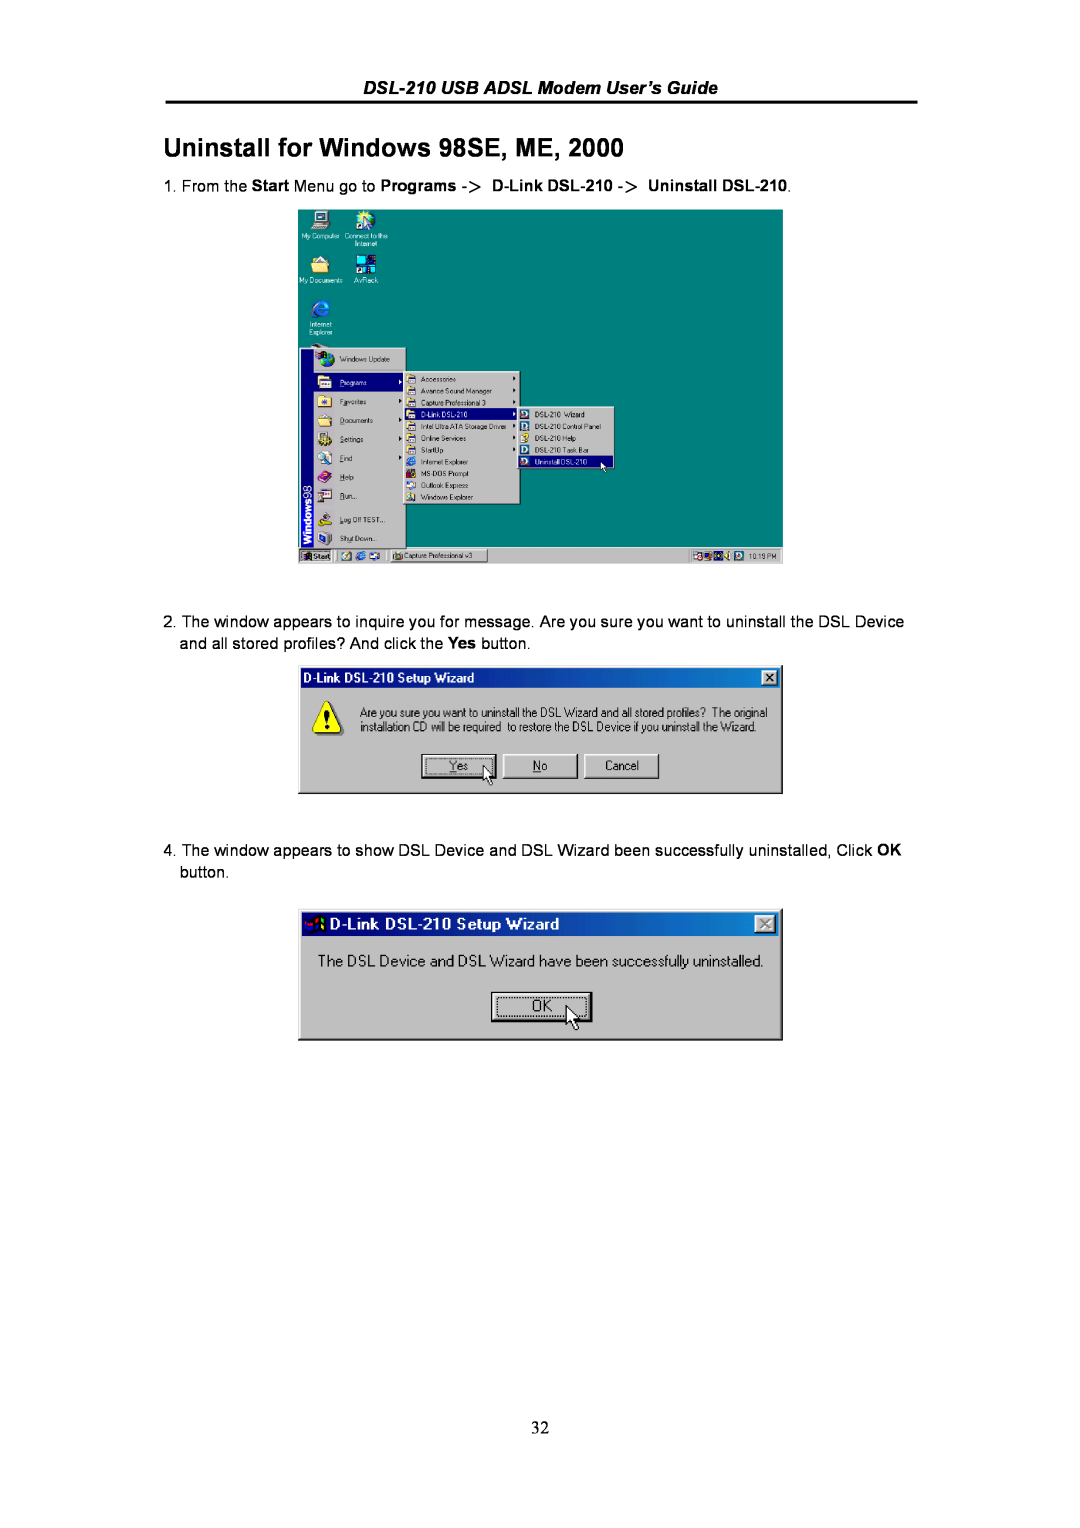 D-Link manual Uninstall for Windows 98SE, ME, DSL-210 USB ADSL Modem User’s Guide 